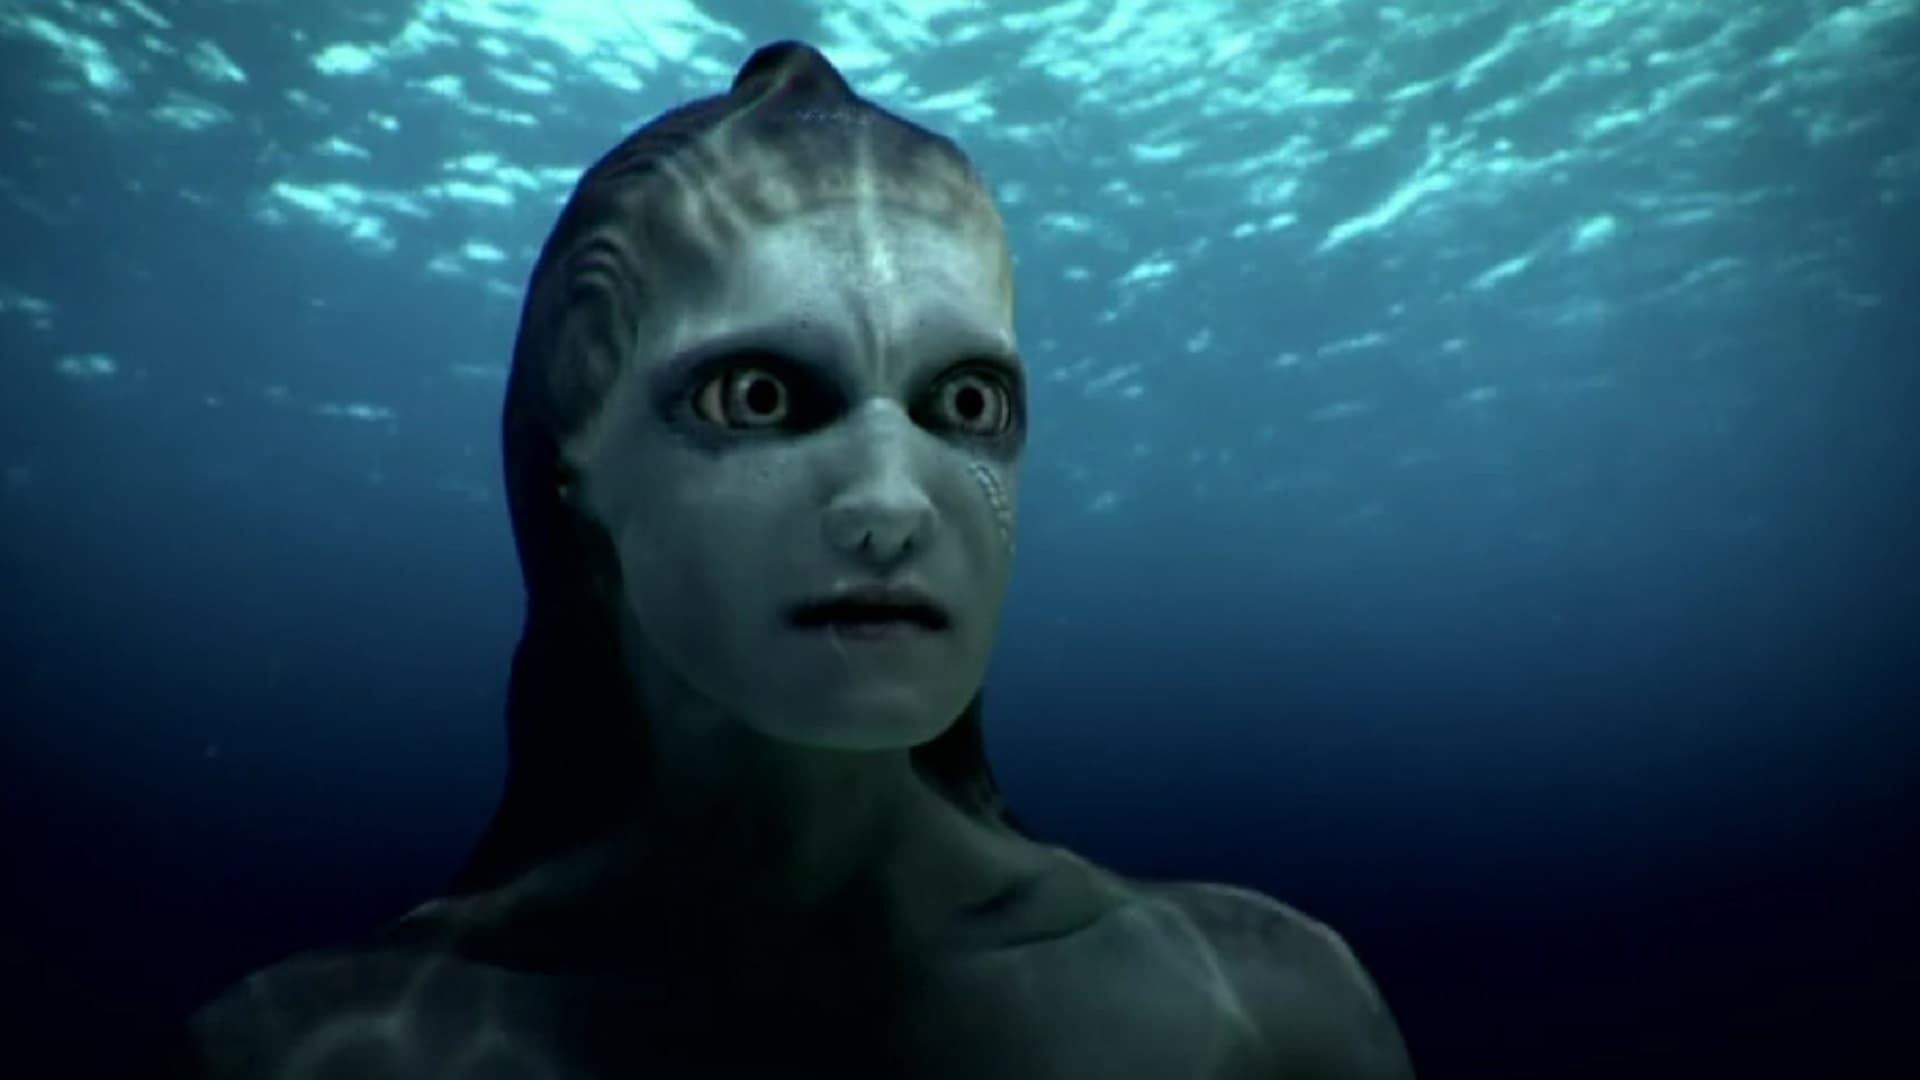 Mermaids: The Body Found background